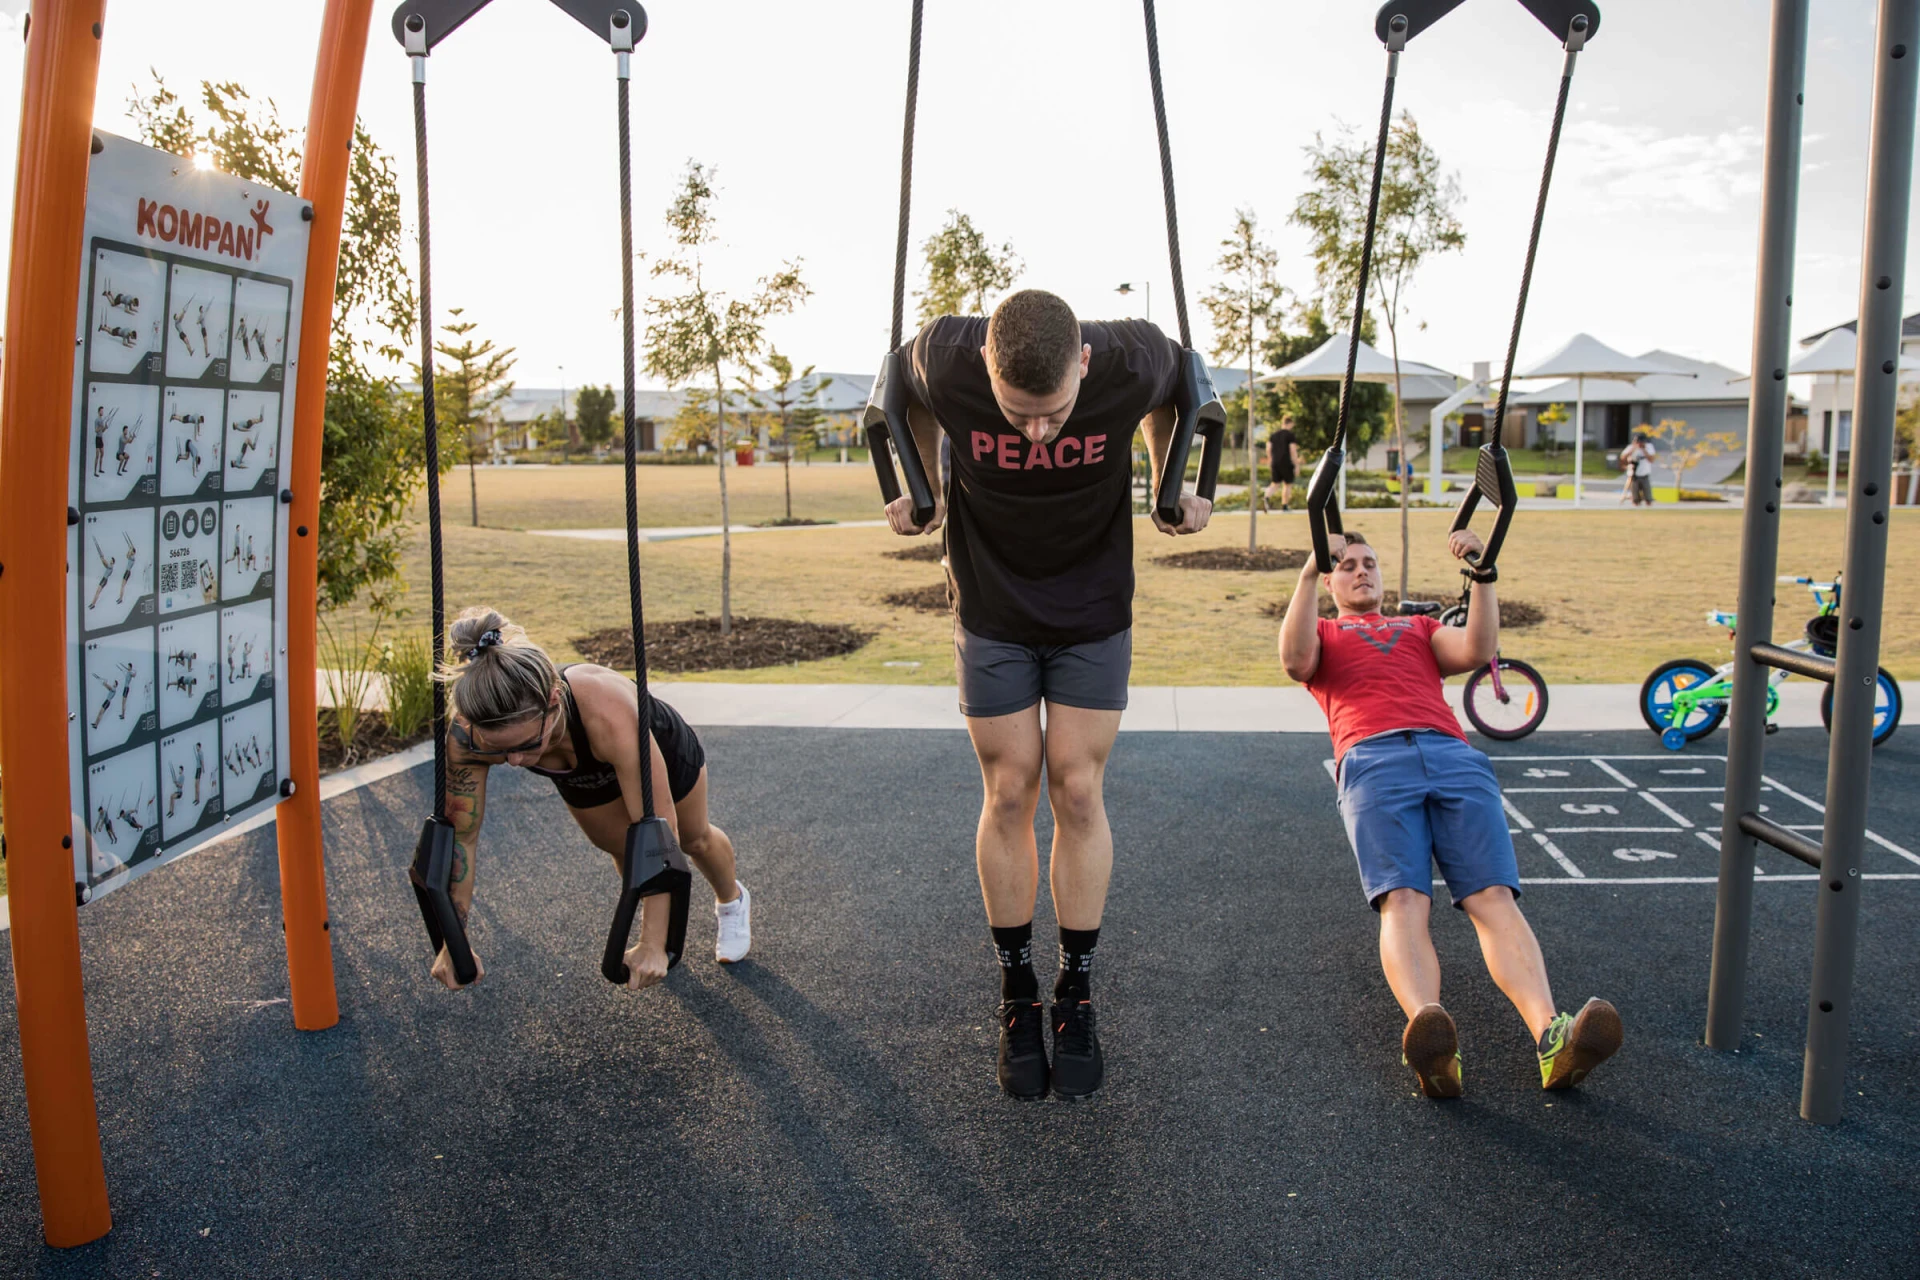 People cross training on outdoor fitness equipment